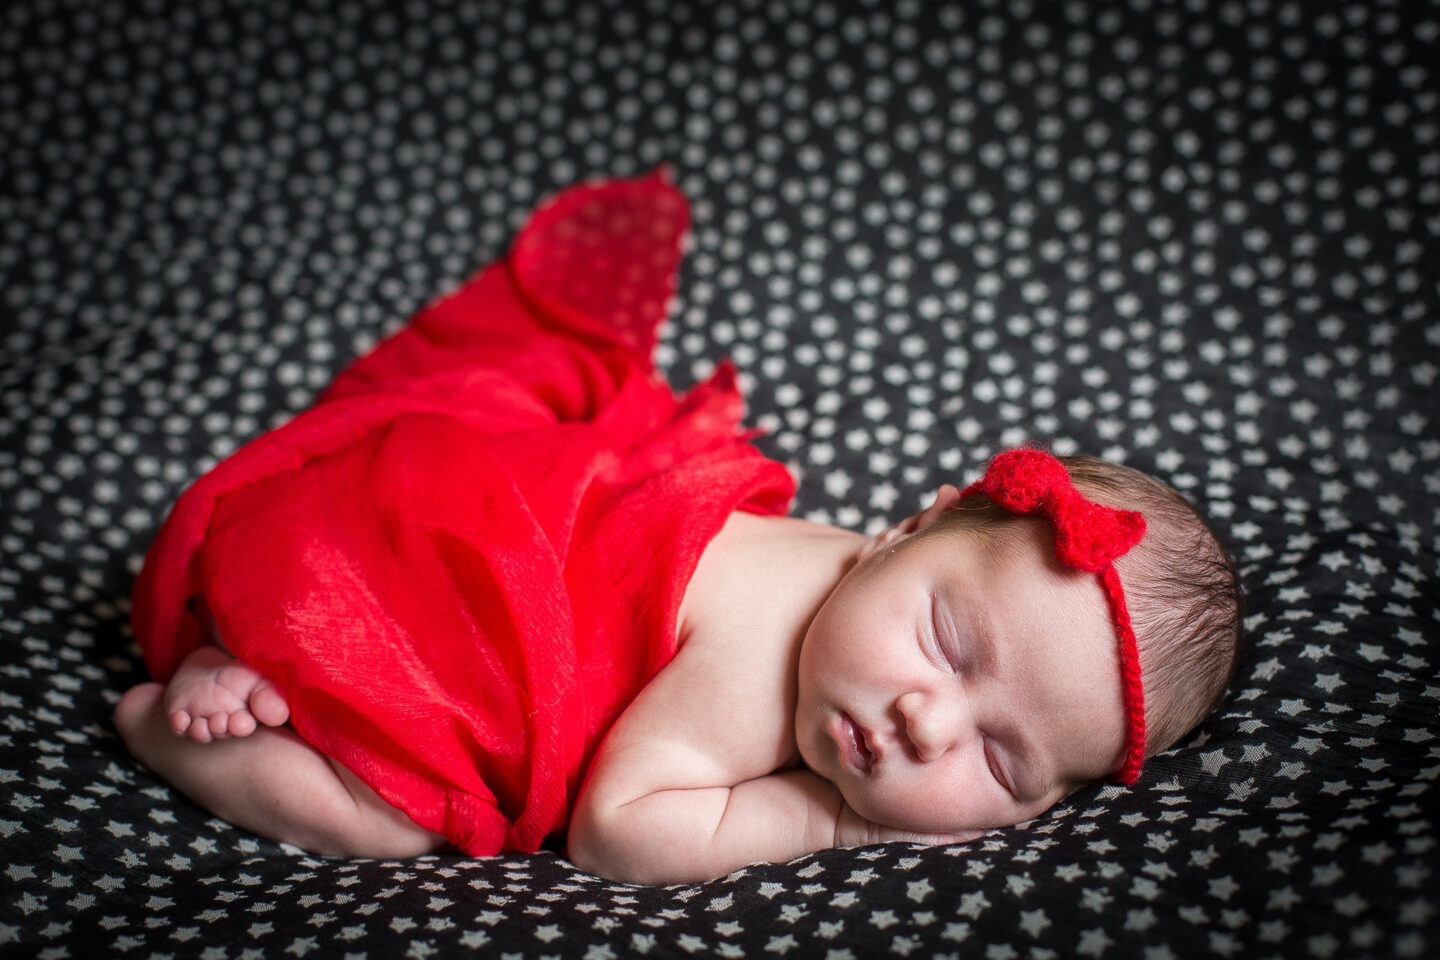 Sleeping newborn in red dress